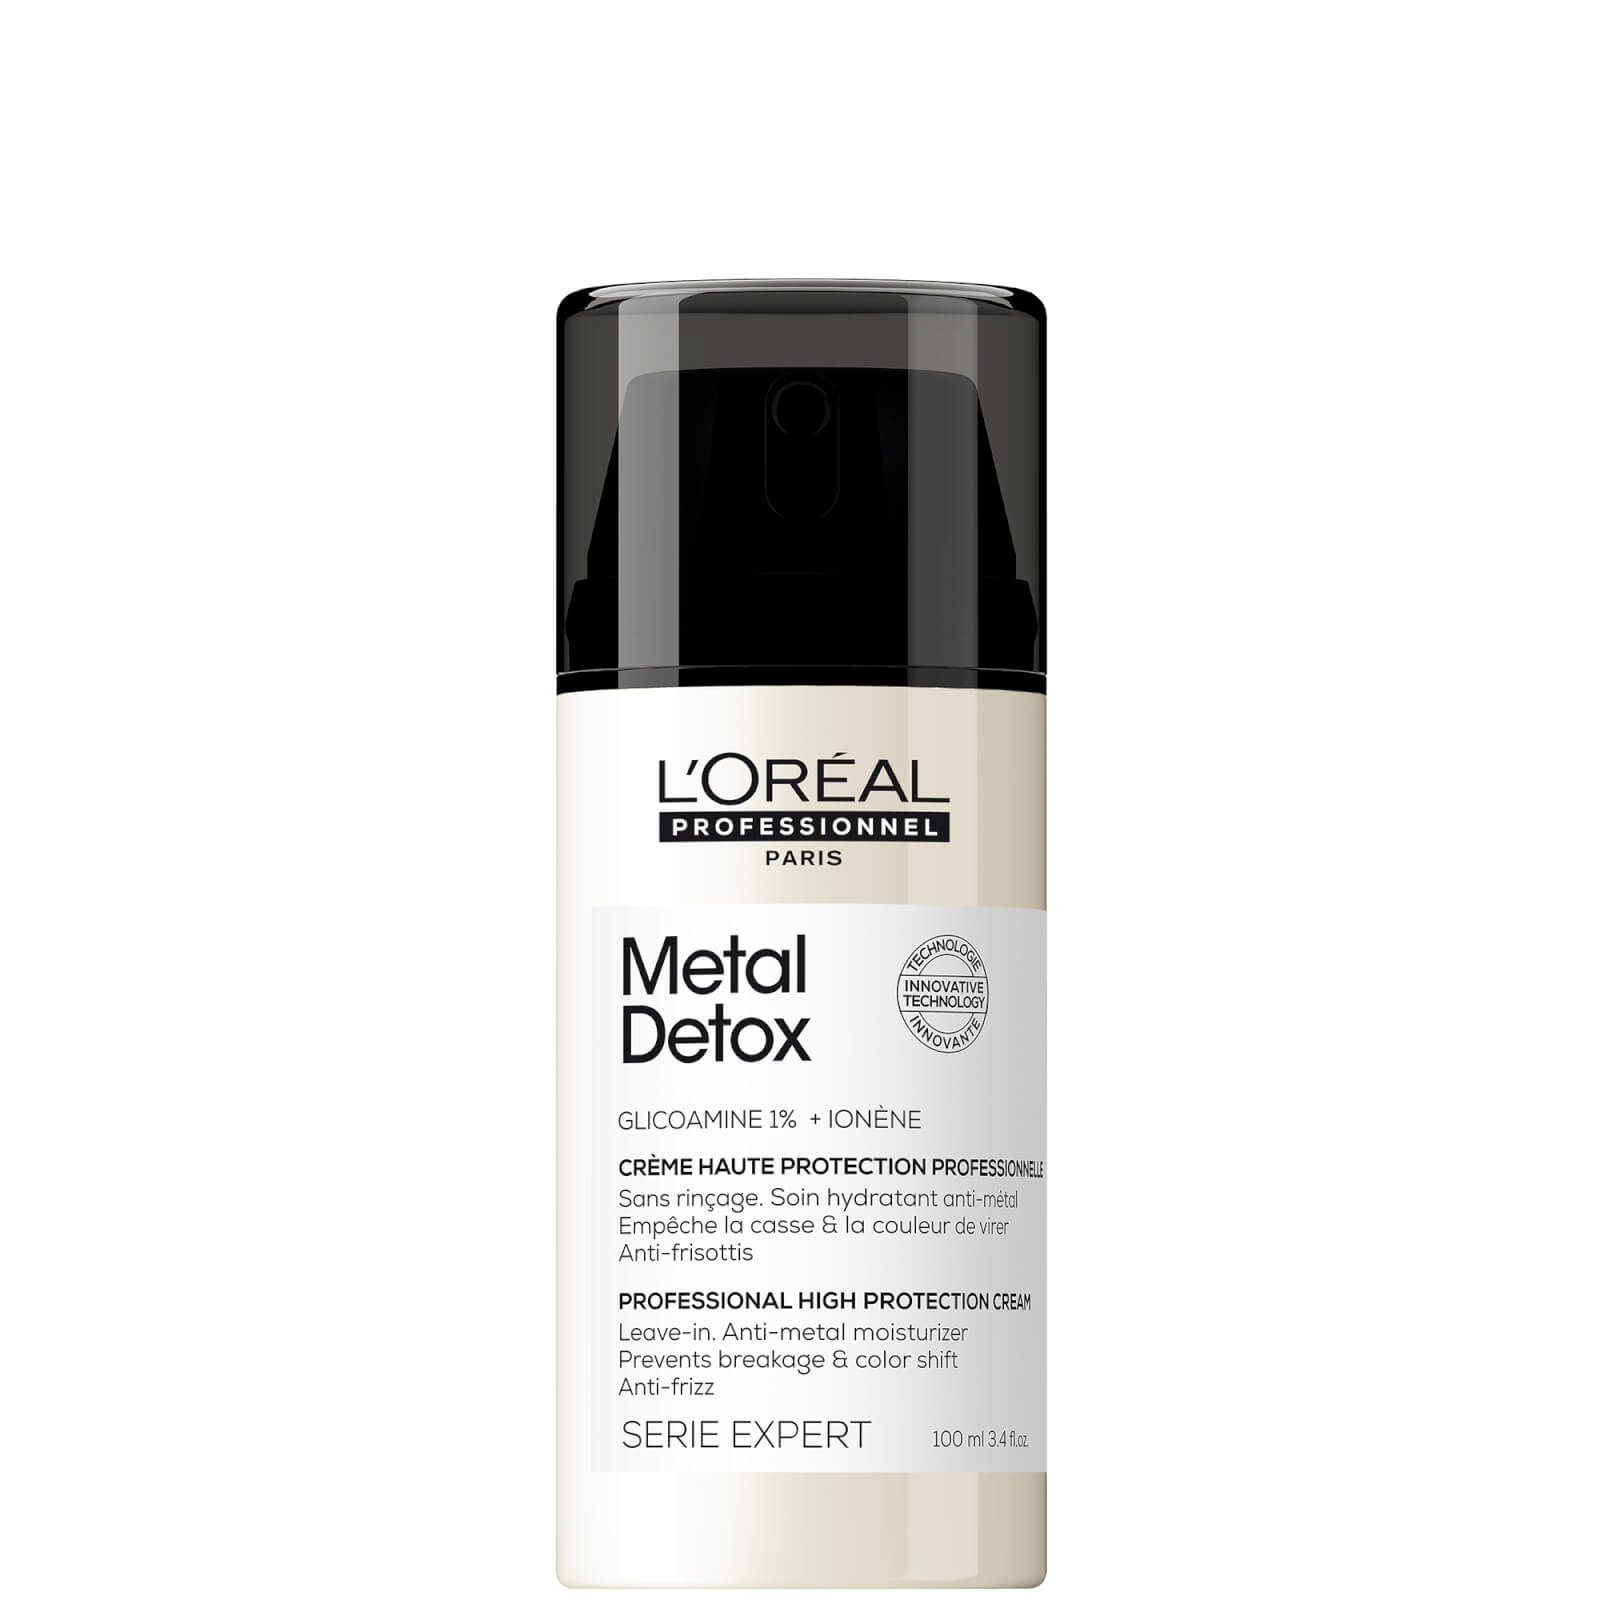 L'Oreal Professionnel Metal Detox Leave-In Hair Cream 100ml